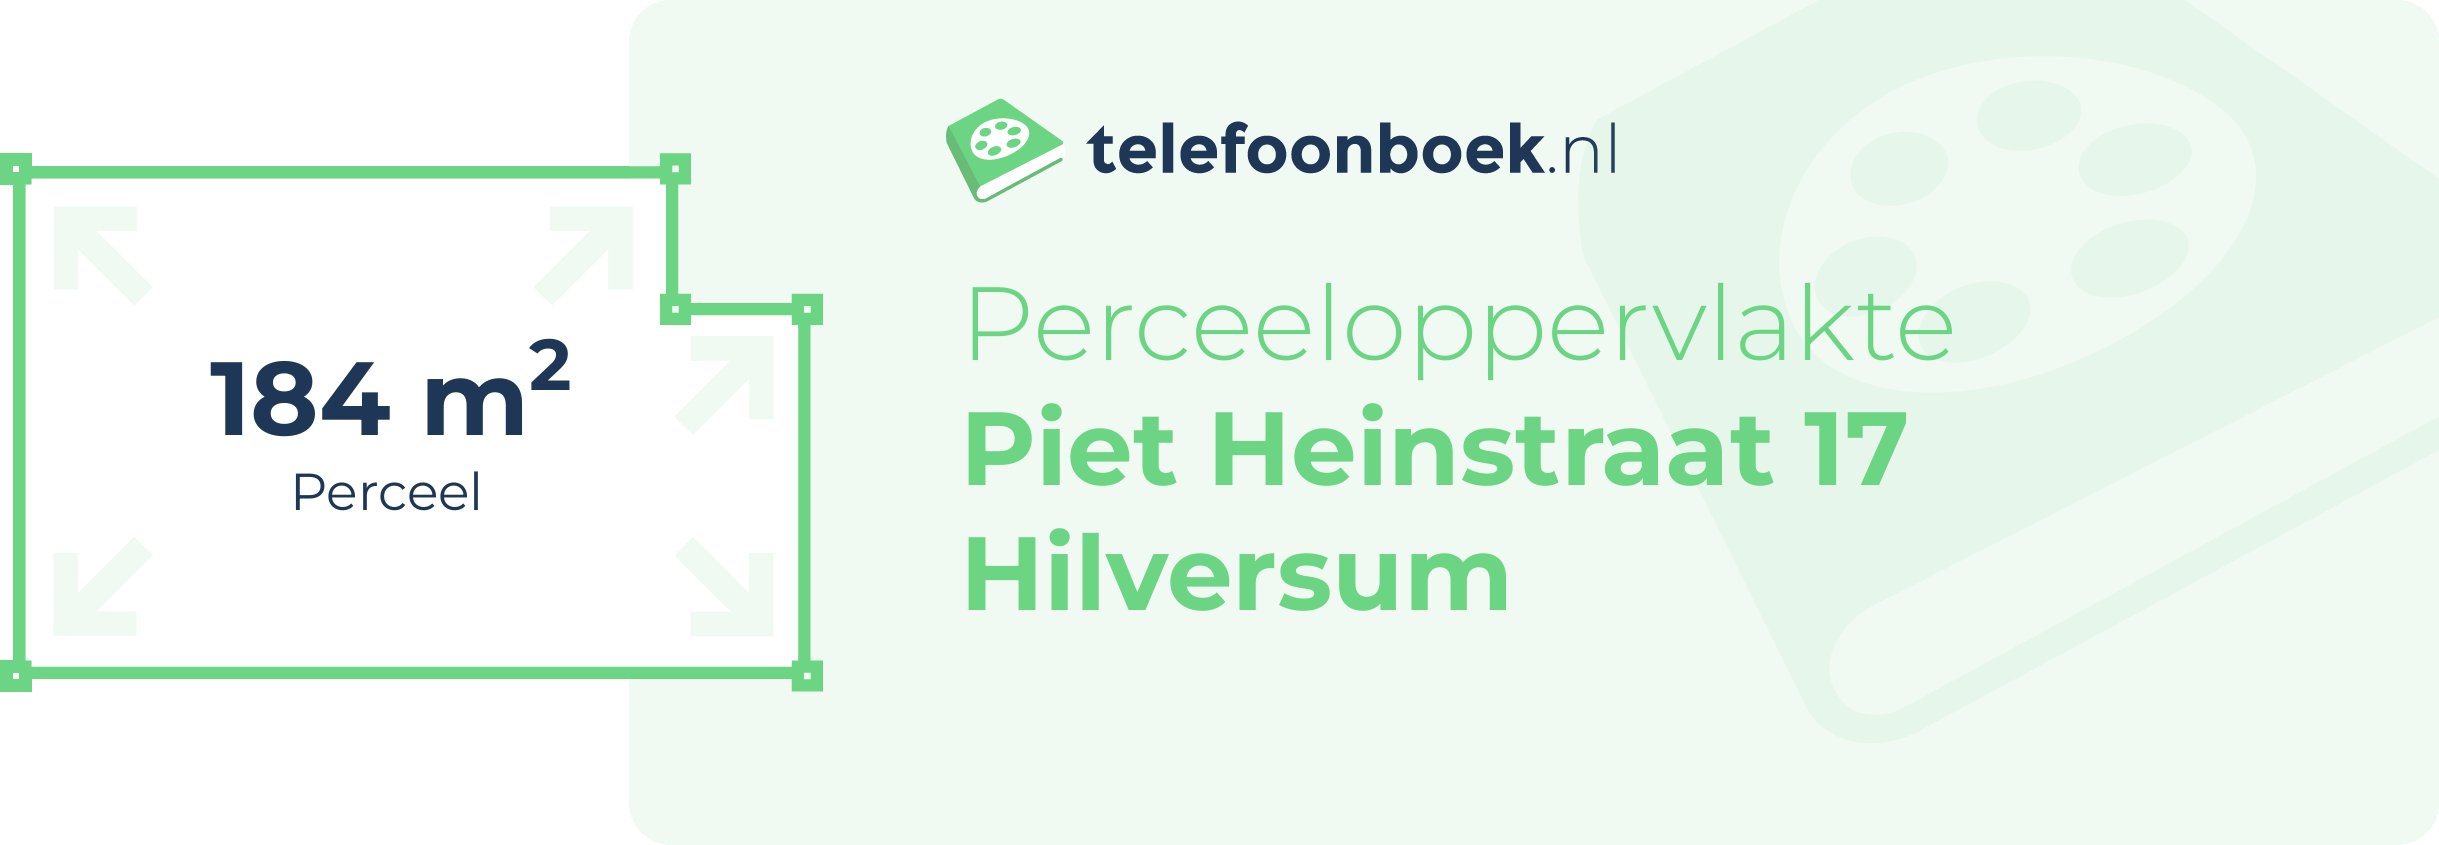 Perceeloppervlakte Piet Heinstraat 17 Hilversum